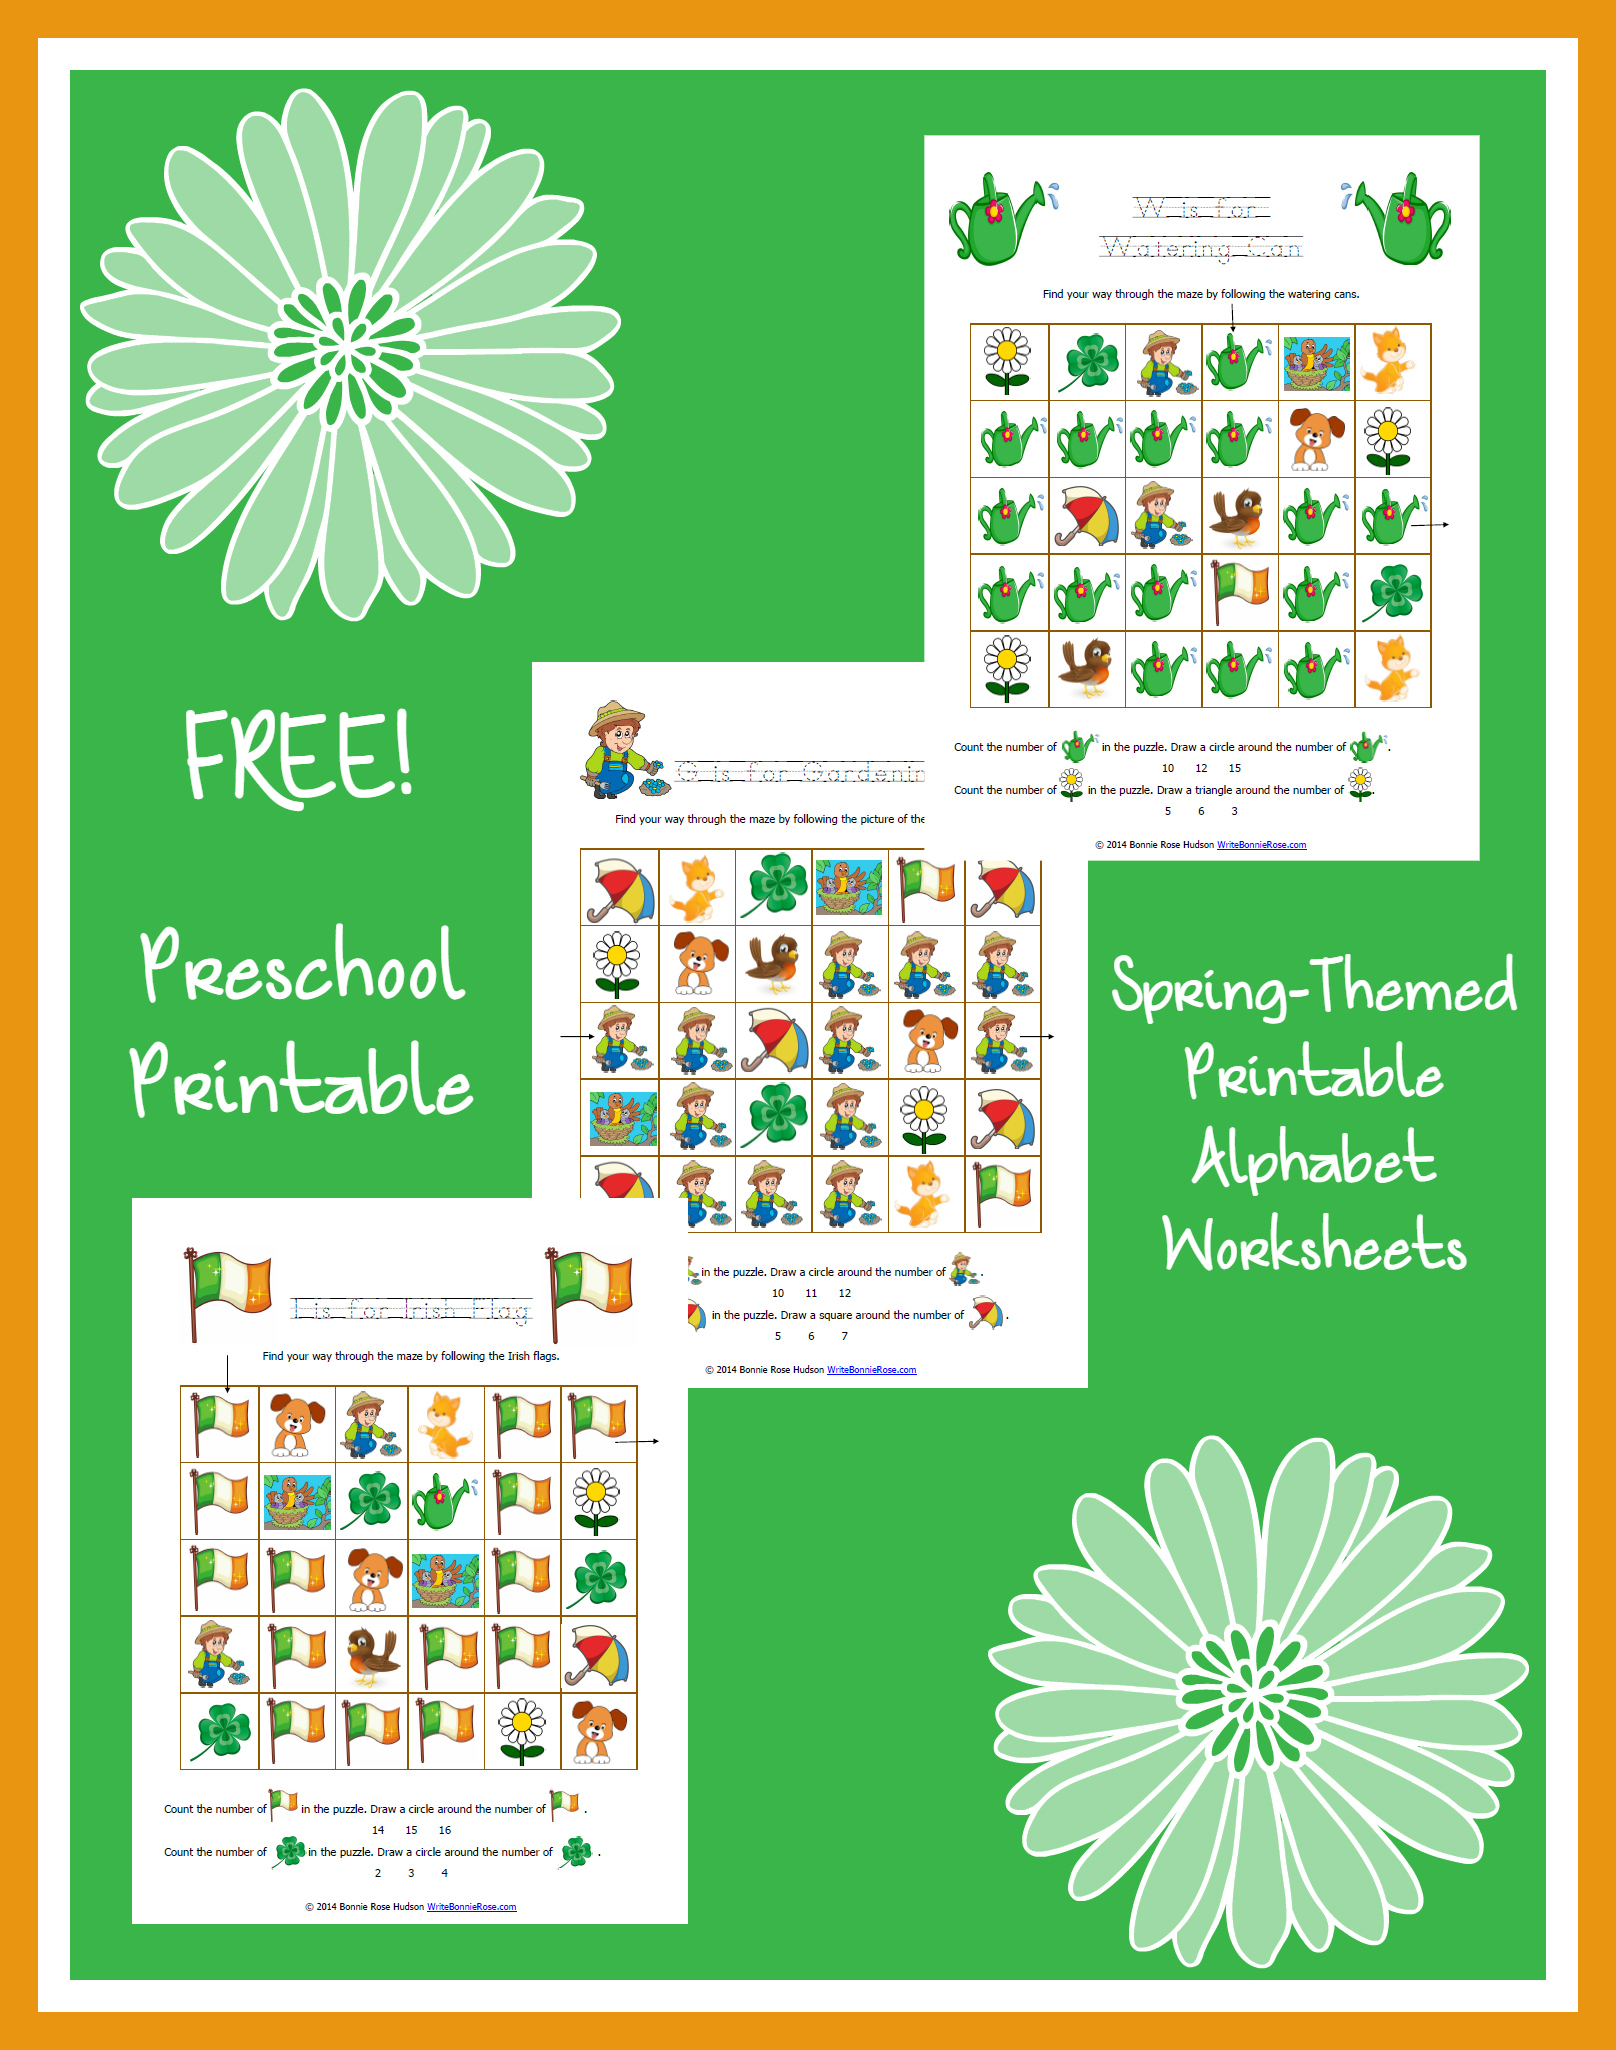 free-spring-themed-printable-alphabet-worksheets-for-preschool